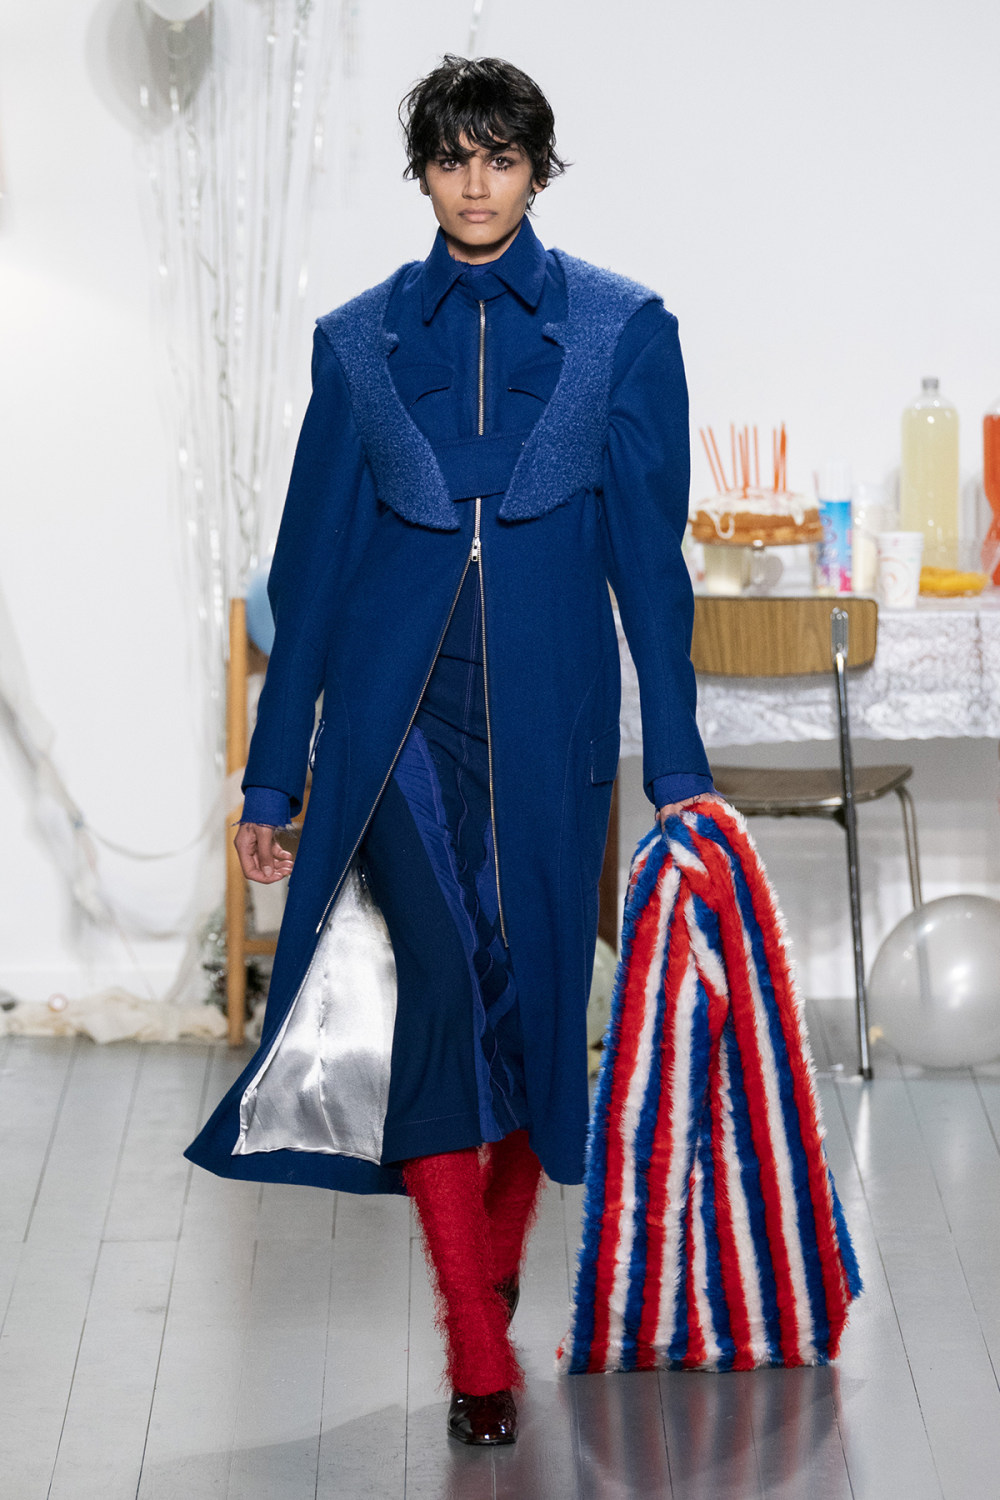 Richard Malone时装系列带有流苏的旋转图案和蓝色丝绸长裤和上衣-23.jpg